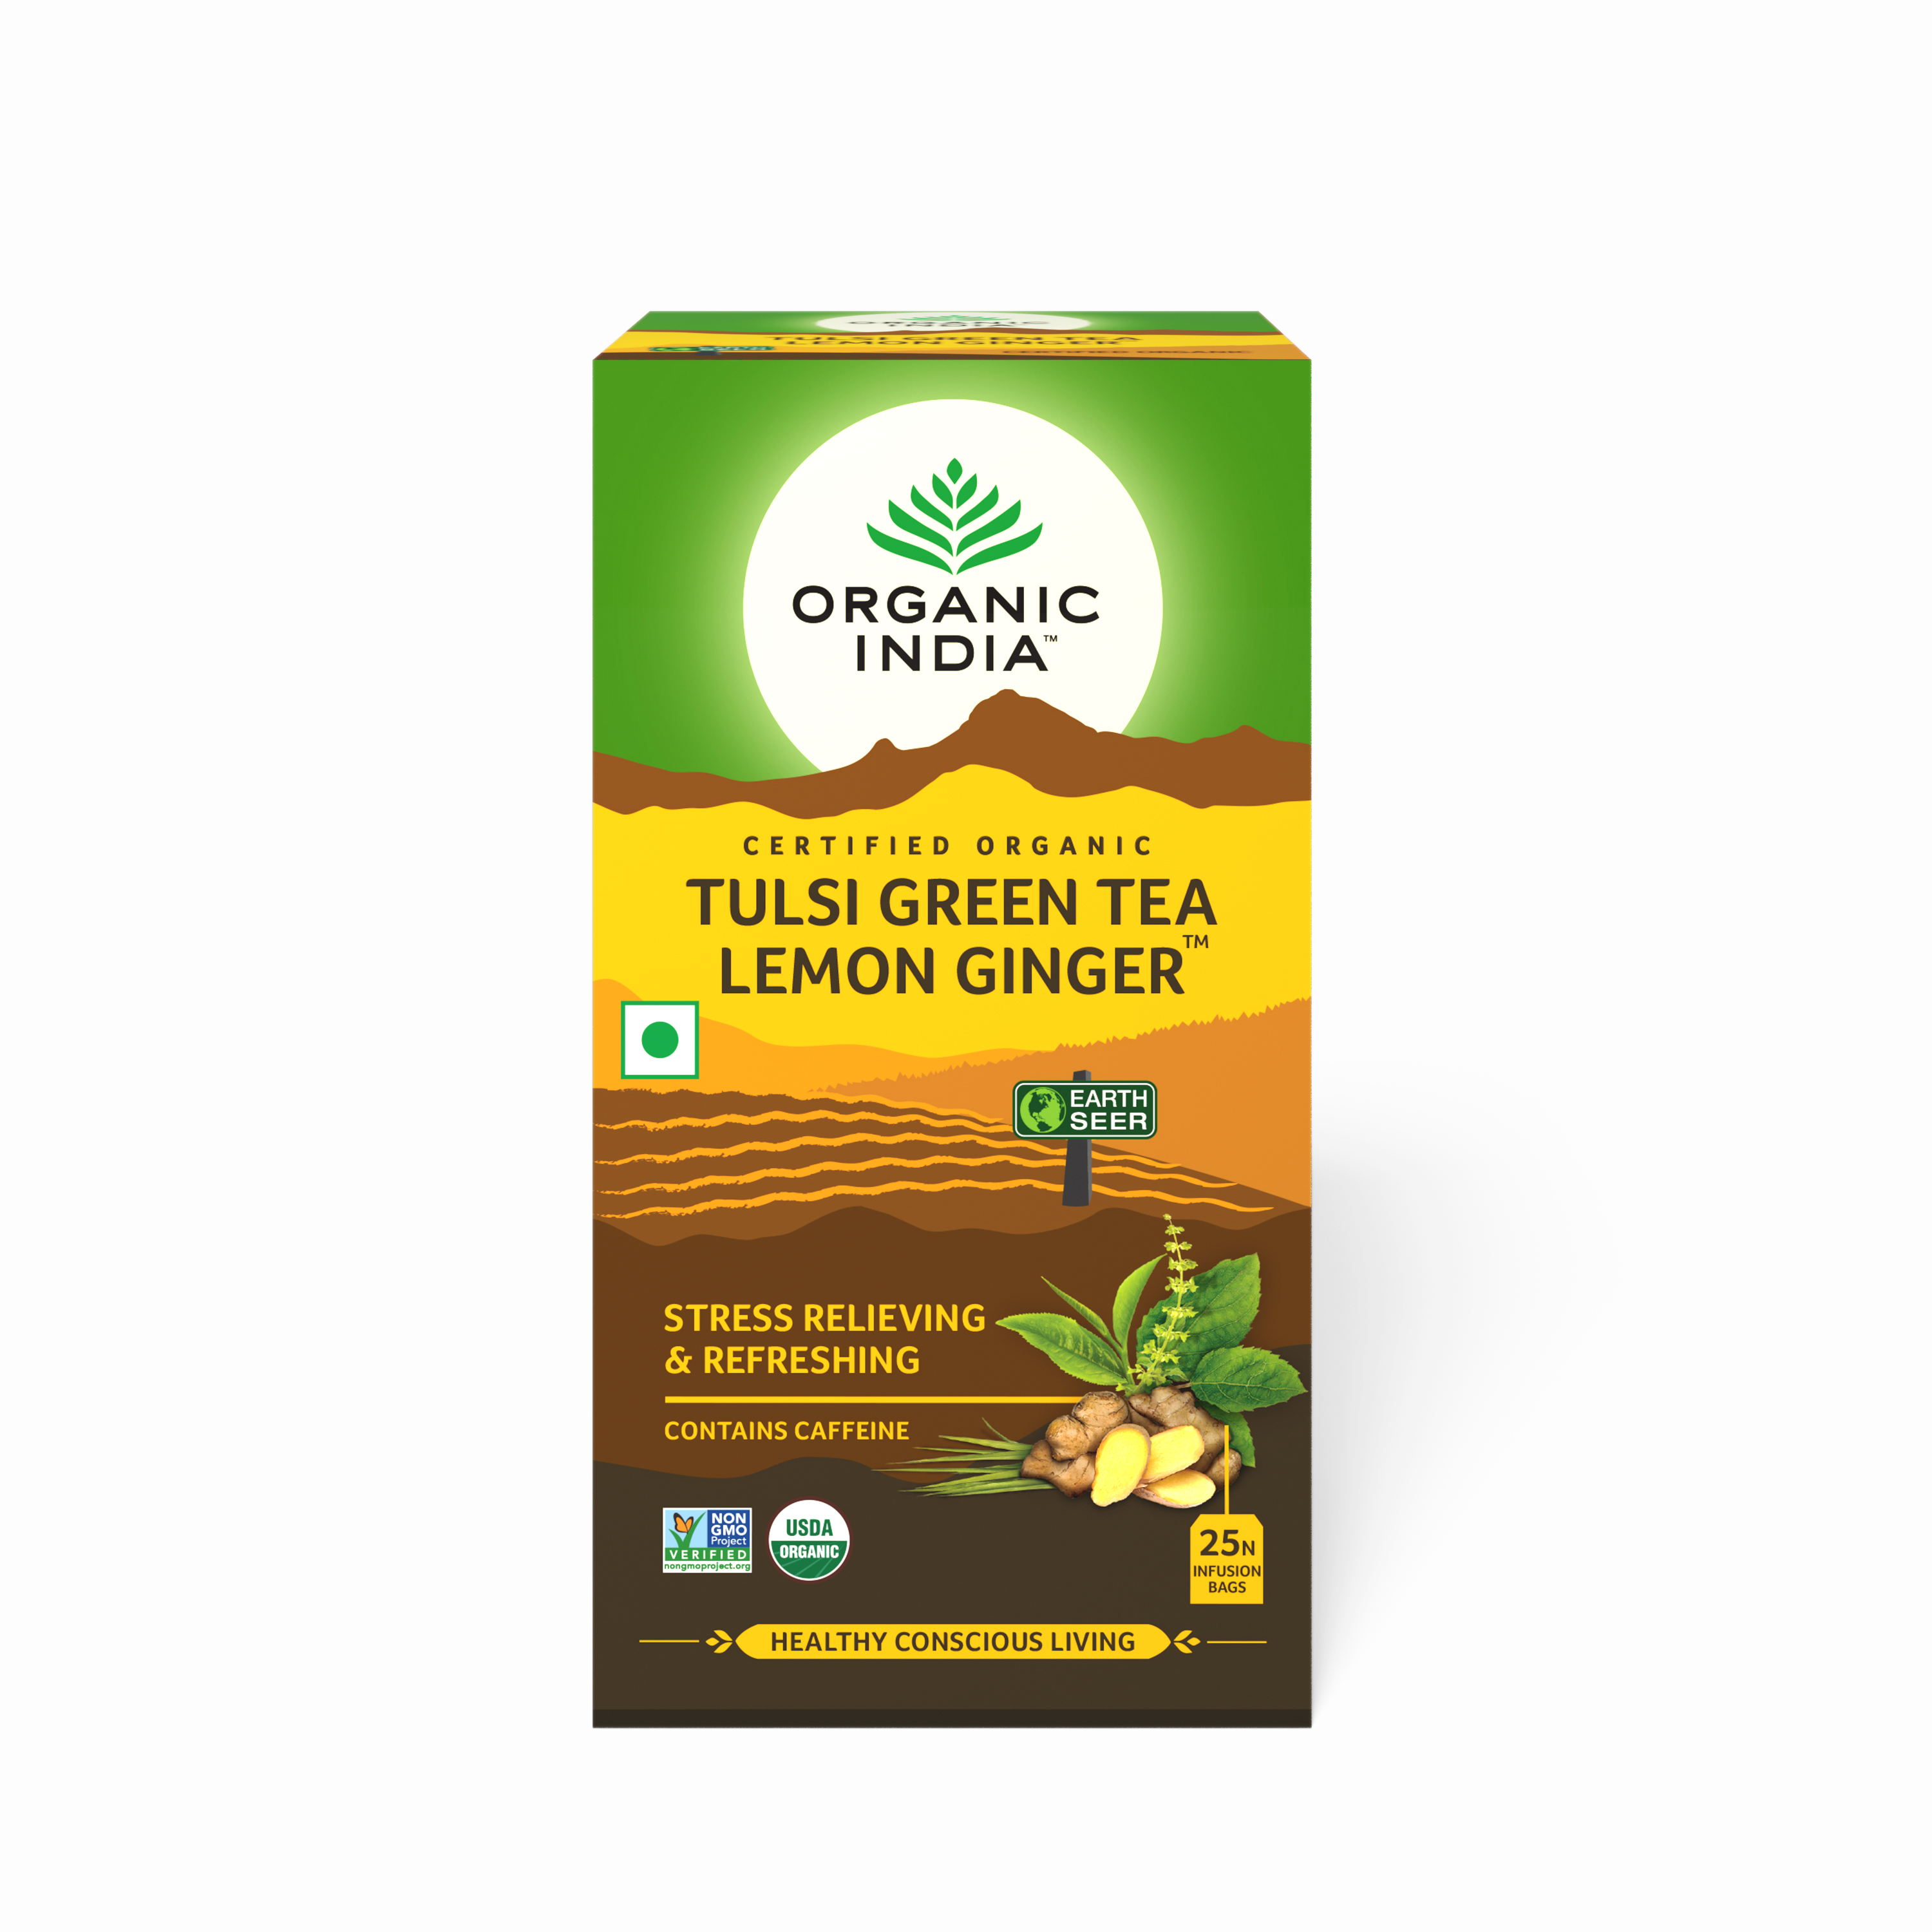 Buy Organic India Tulsi Green Tea Lemon Ginger at Best Price Online